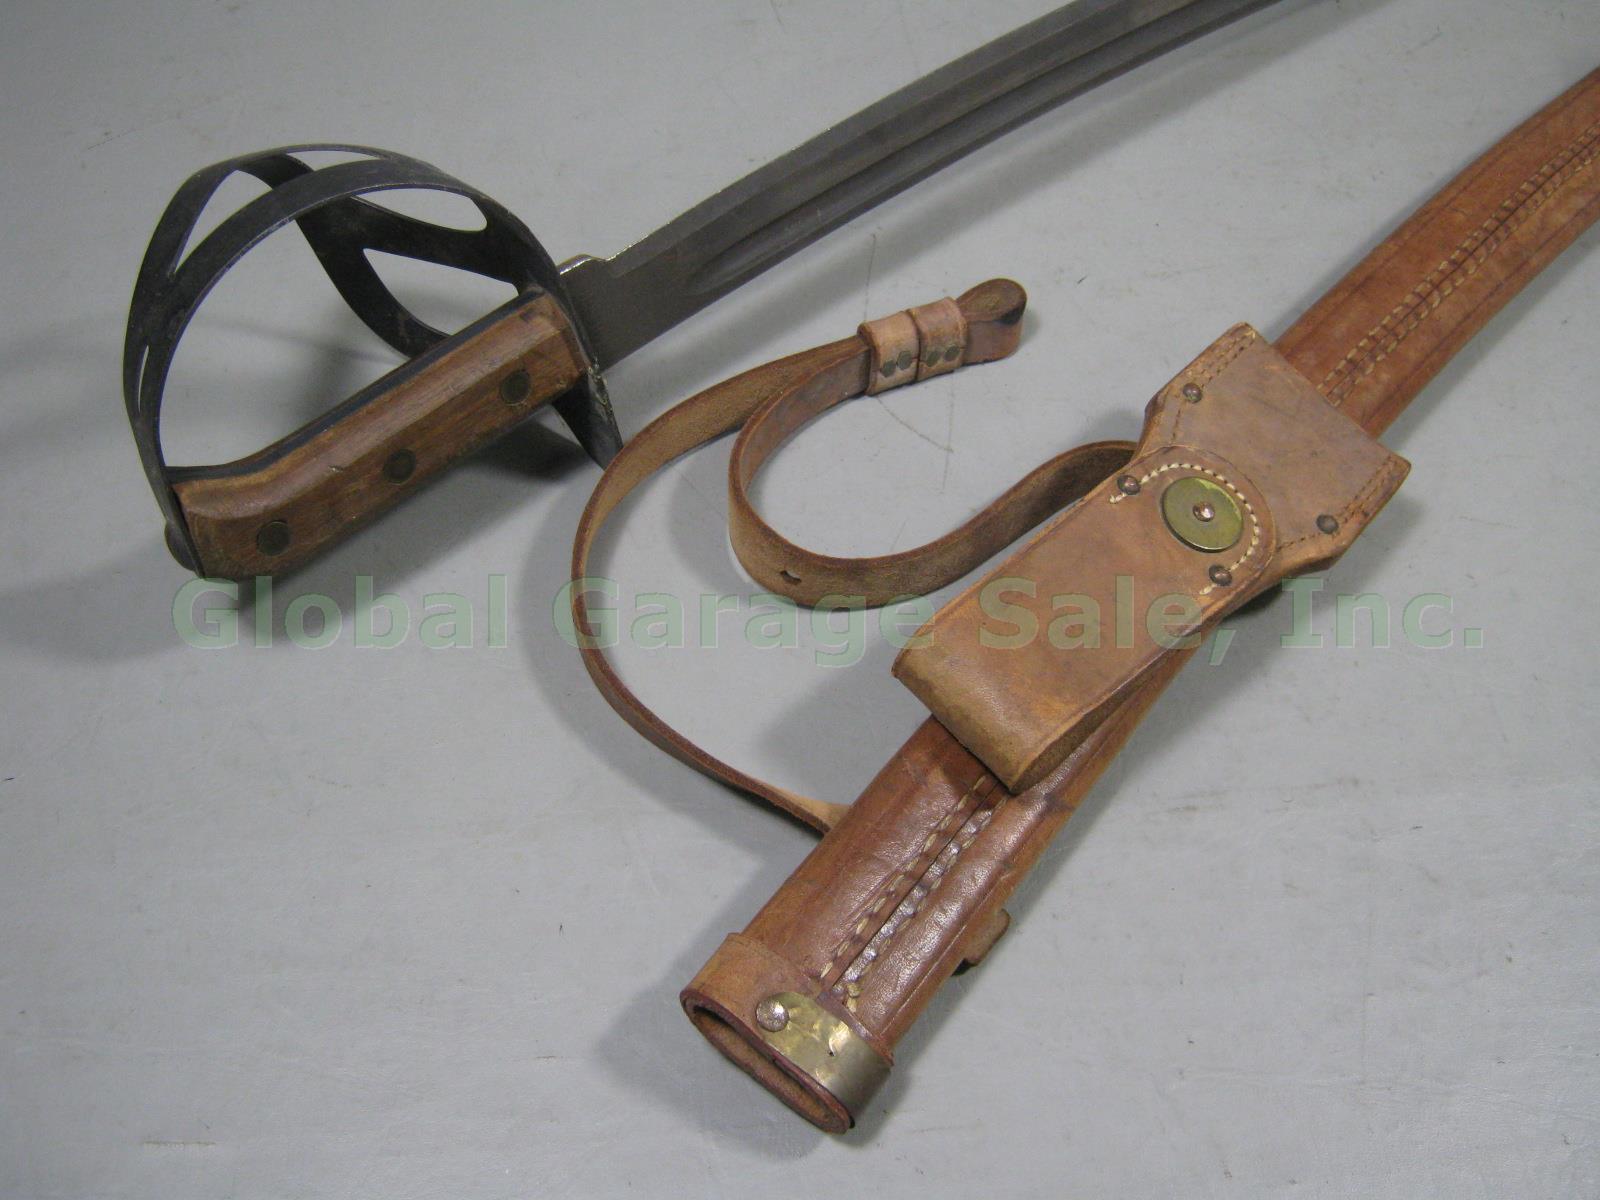 Vtg Milsco USN Navy Naval Klewang Cutlass Sword W/ Original Leather Scabbard NR! 4